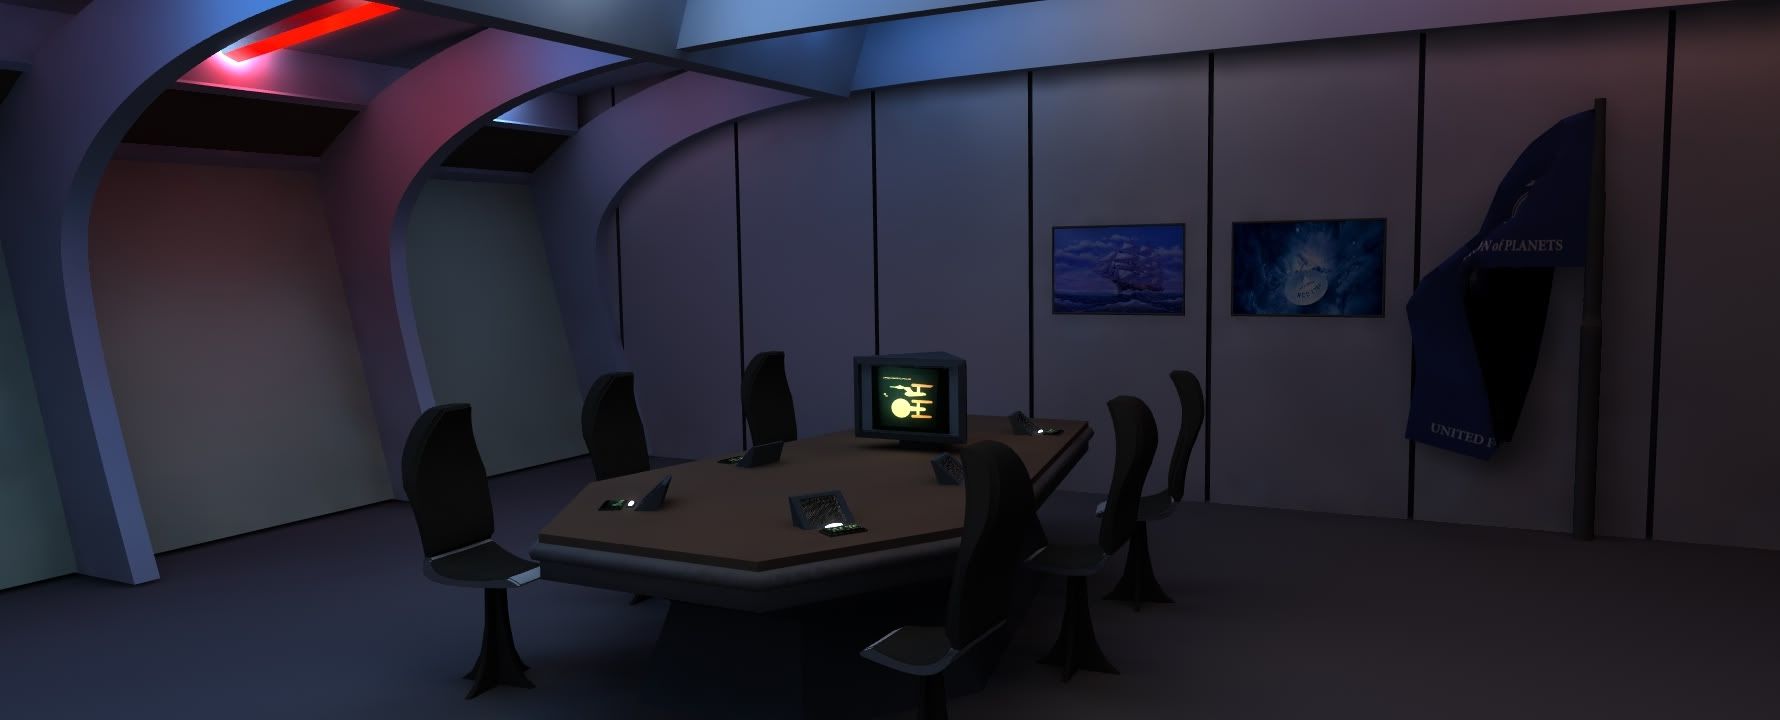 Defiant-conference-room-3.jpg